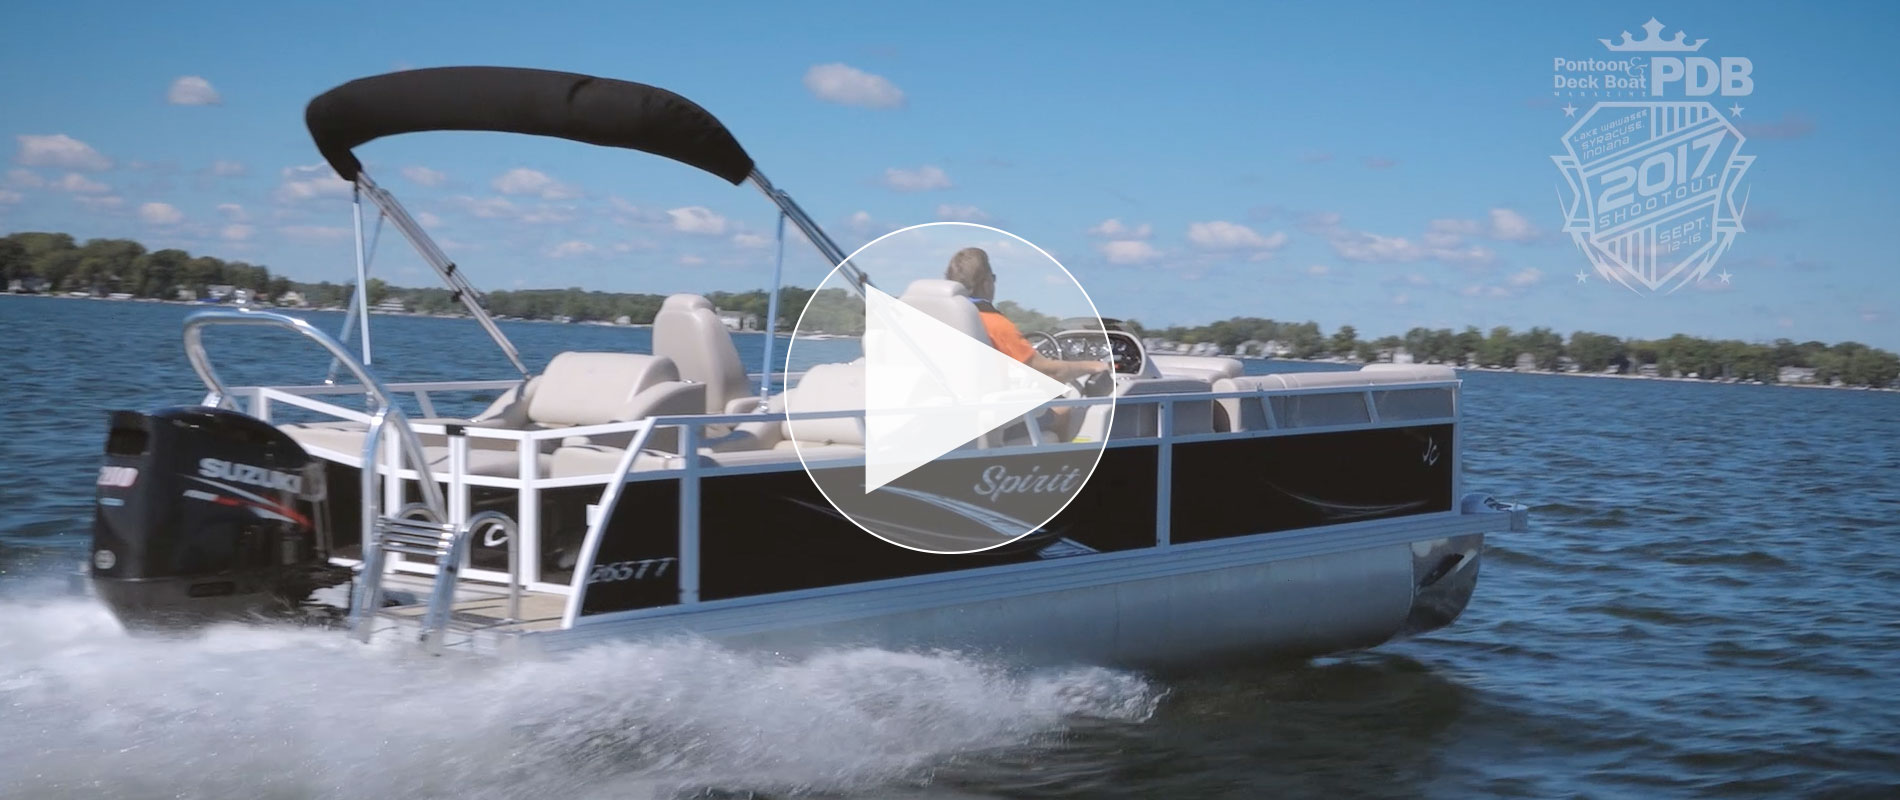 Pontoon & Deck Boat Magazine 2017 Shootout Video featuring the Spirit 265TT RFL